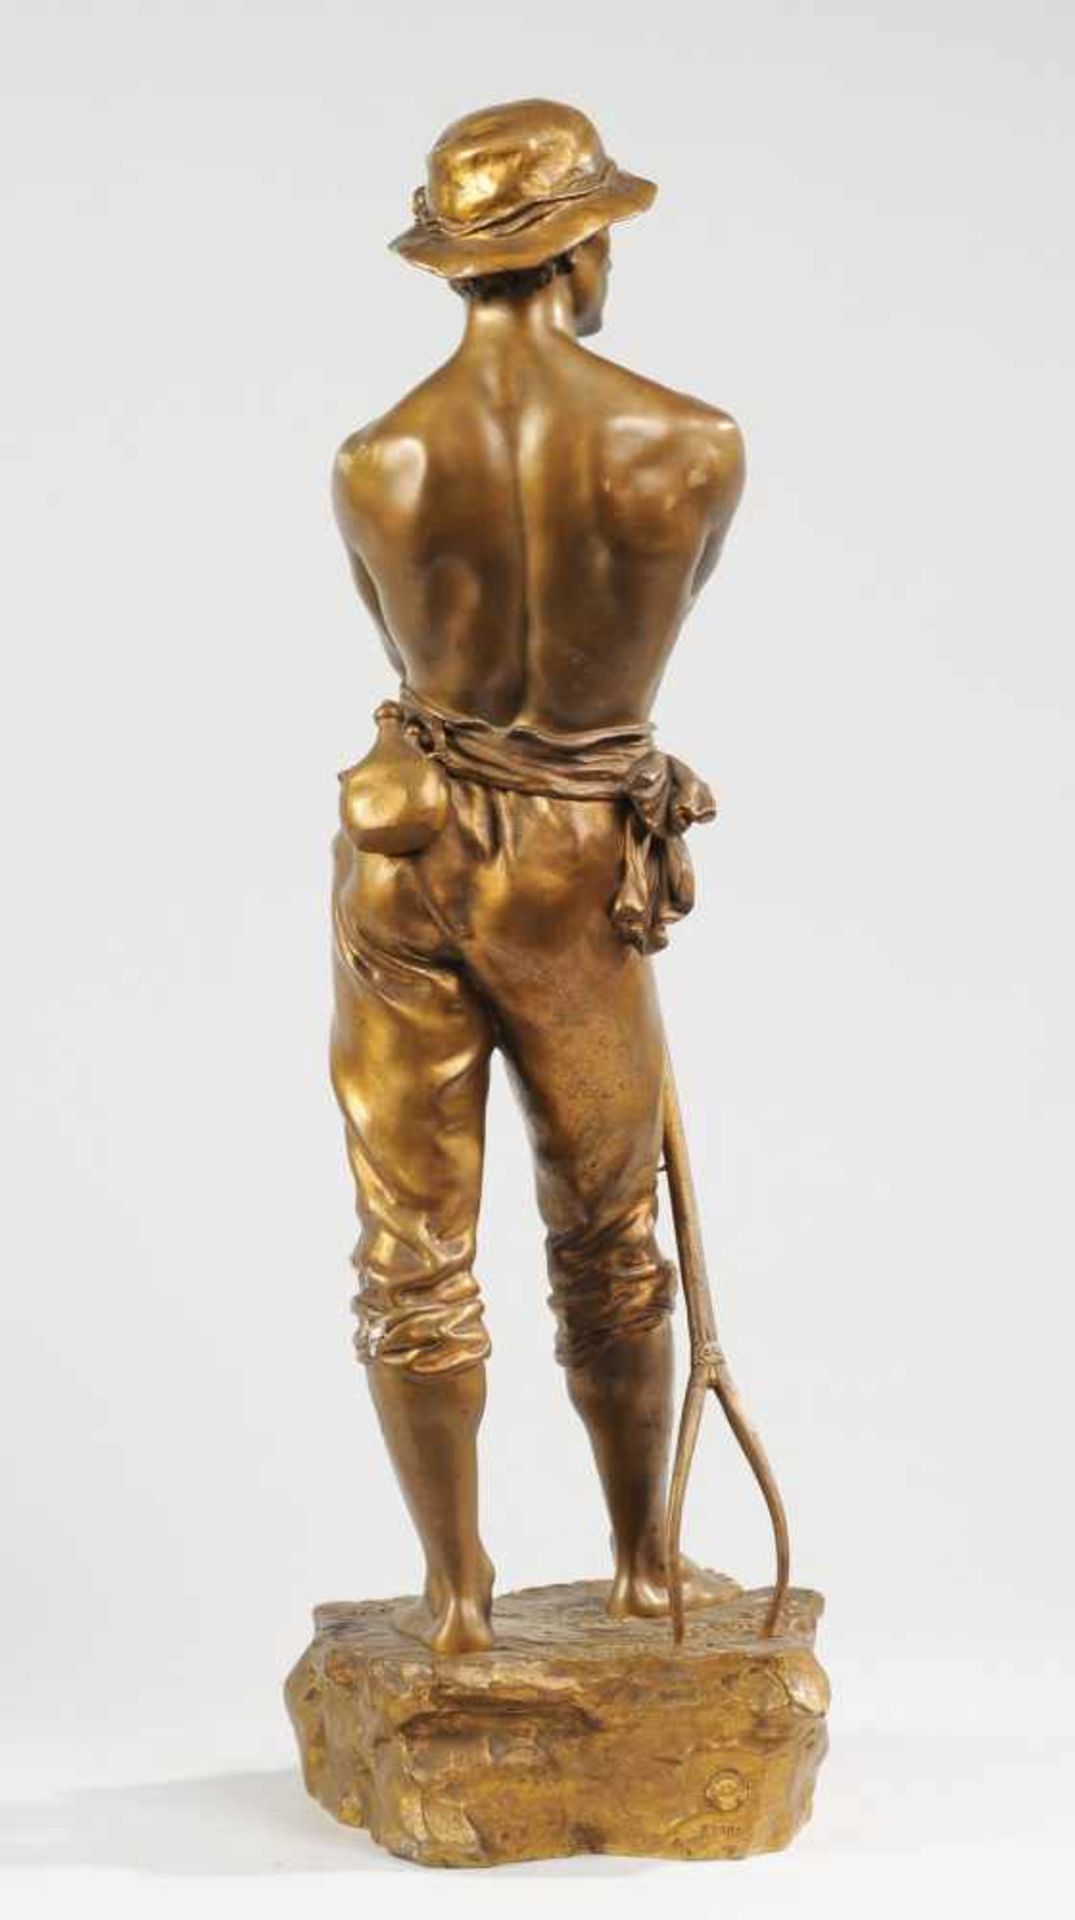 Lévy, Charles Octave nach(Paris 1820 - 1899) Bronze, patiniert. "Faneur". Auf felsartigem Sockel mit - Bild 3 aus 4